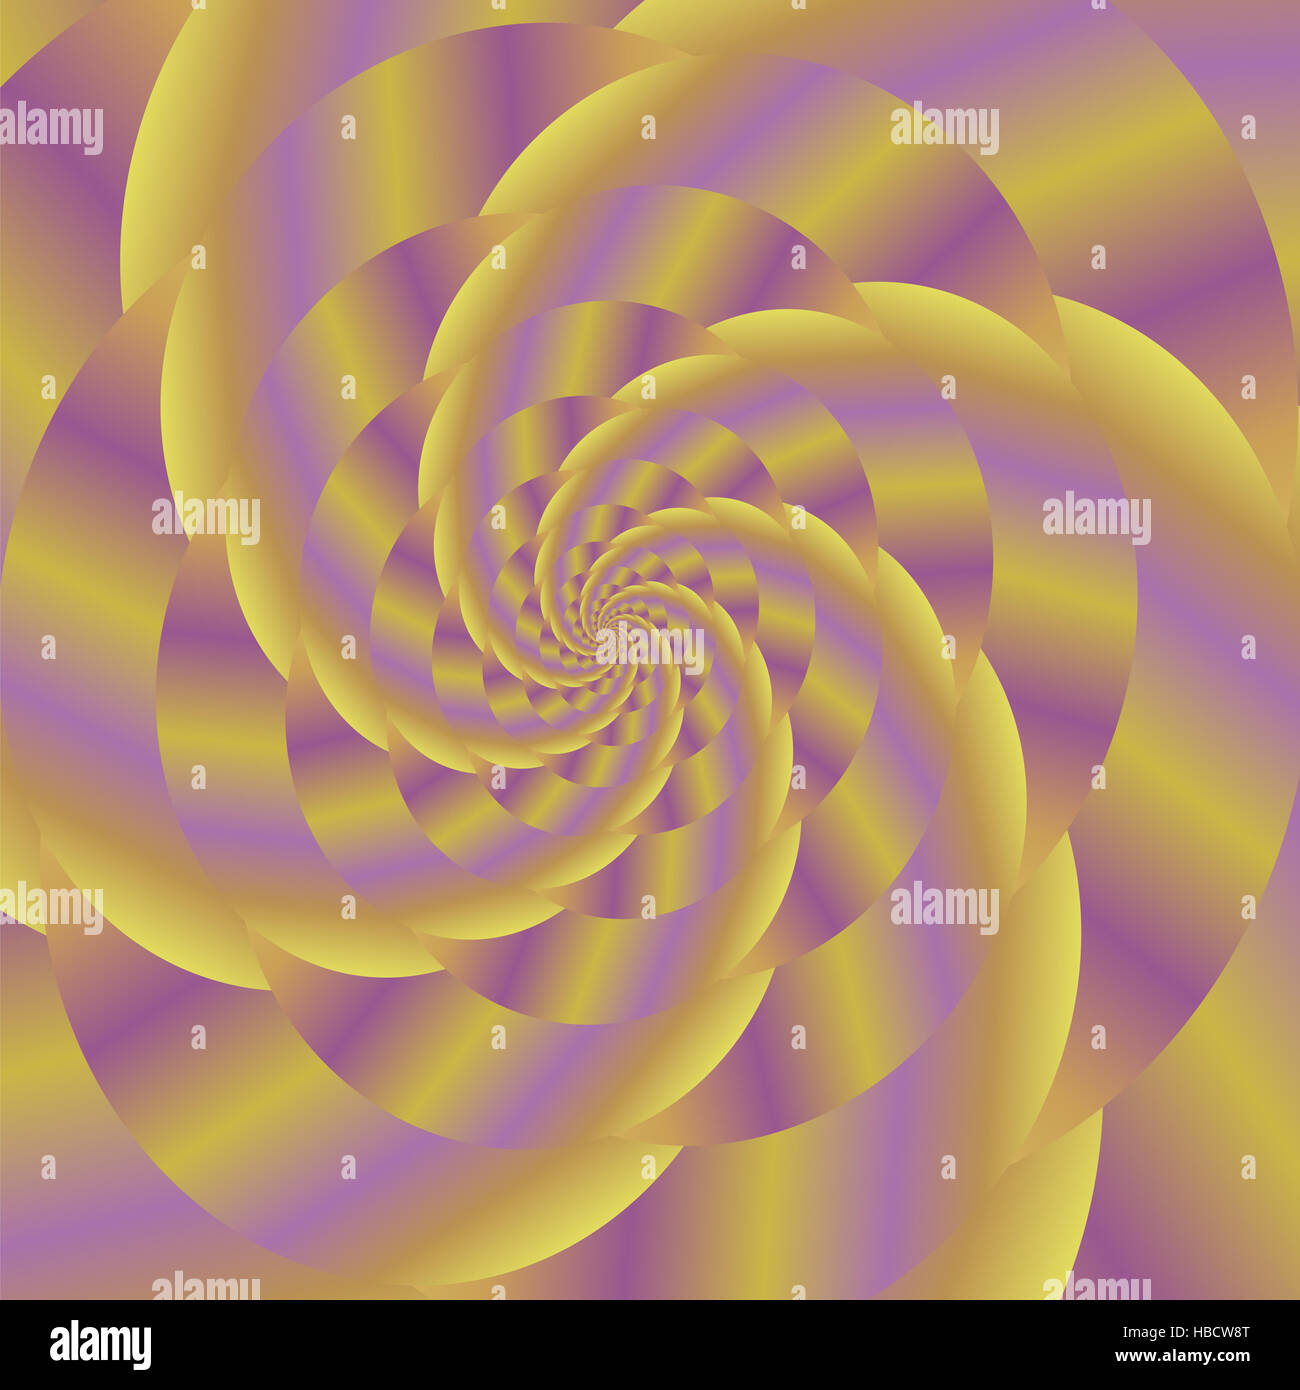 Fractal Design. Colored Spiral Background. Stock Photo